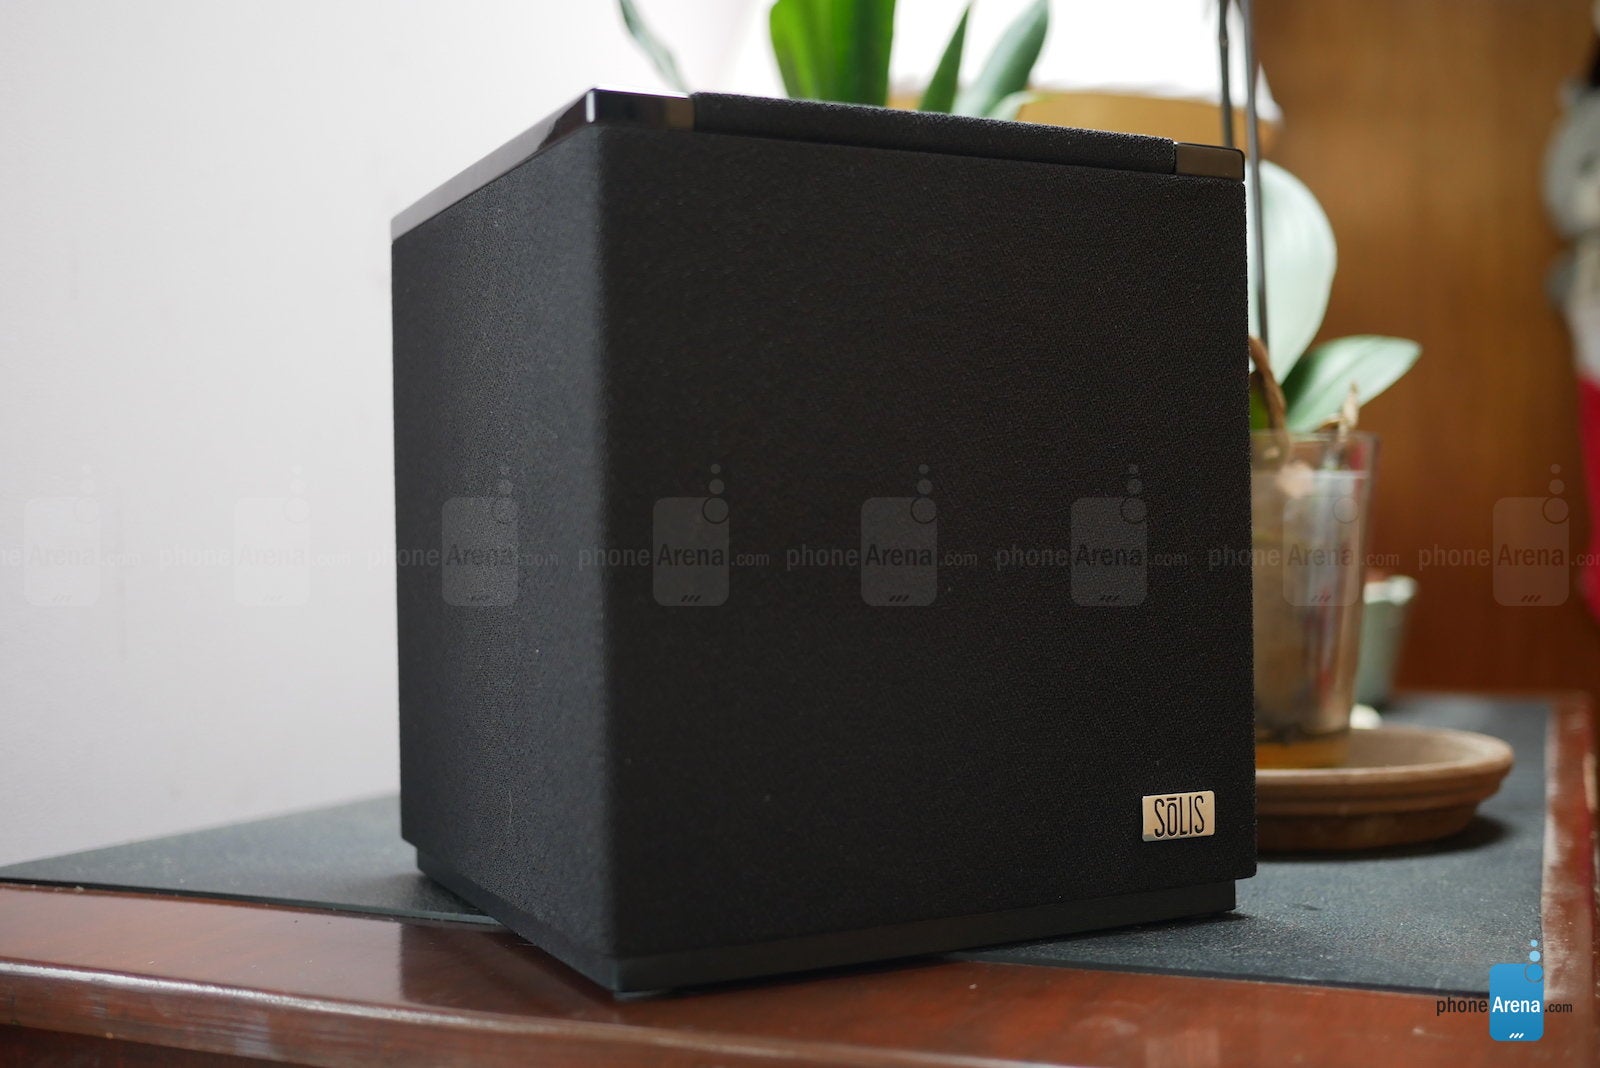 Sleek Chromecast speaker with a vintage feel: Solis SO-7000 hands-on